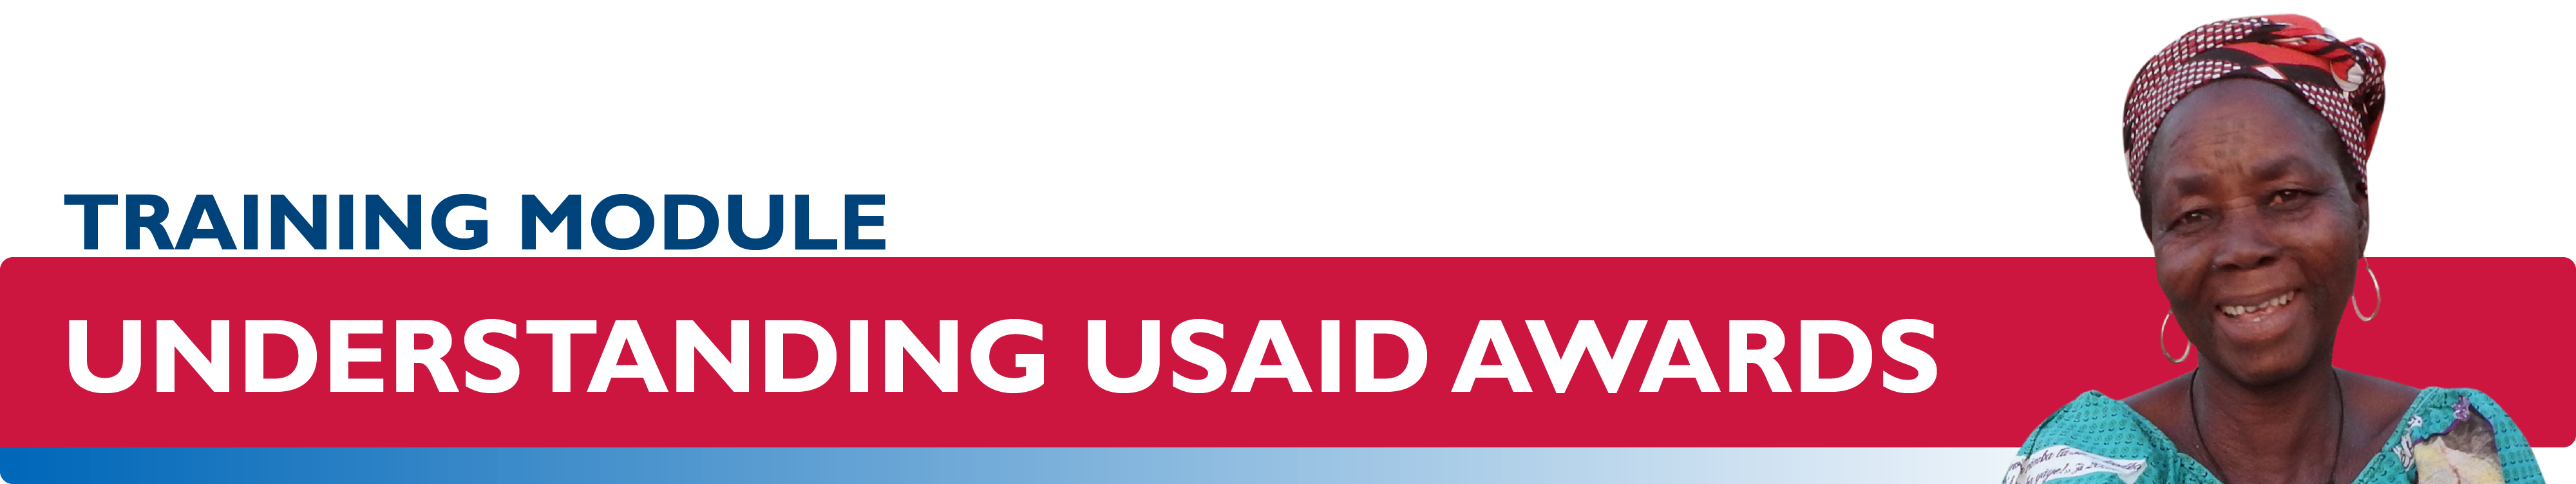 Understanding USAID Awards 